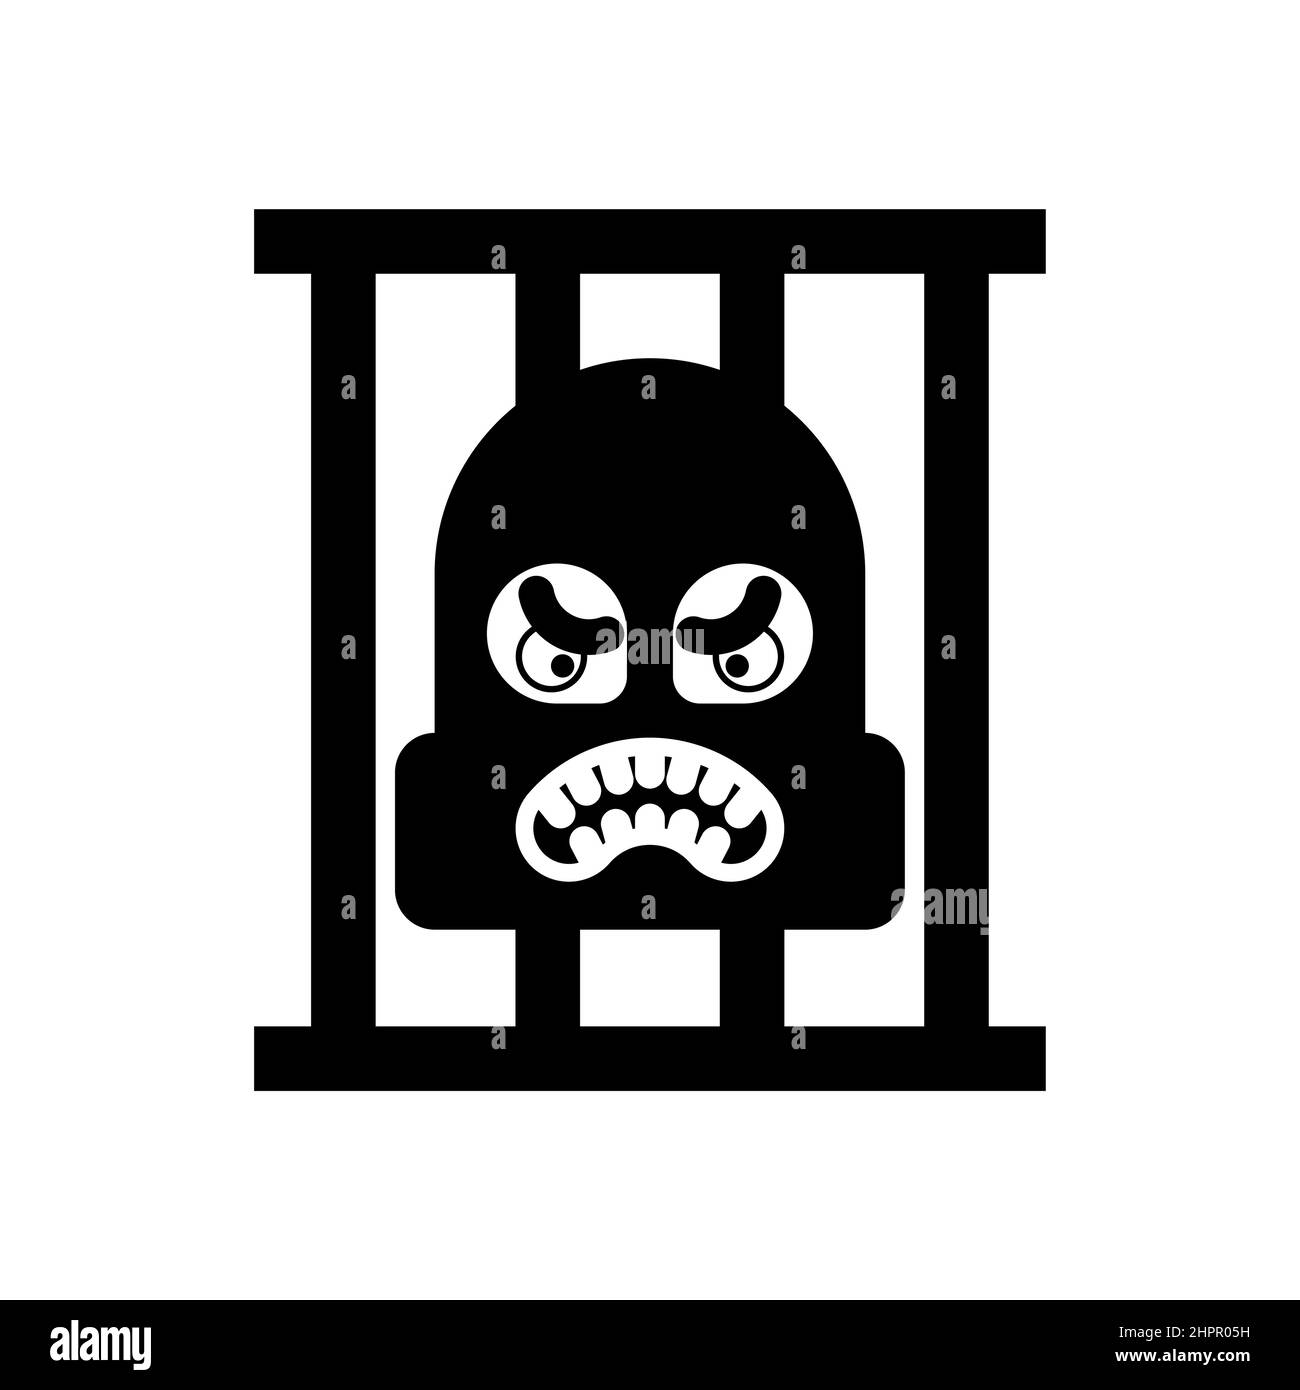 Criminal in jail icon. Bandit in prison sign. Stock Vector